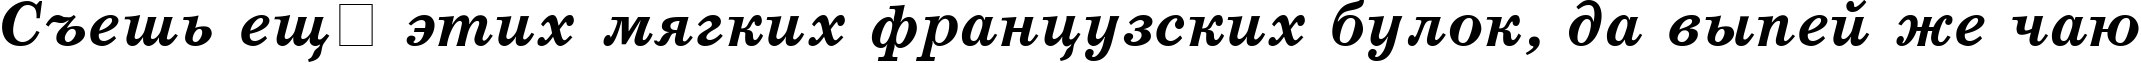 Пример написания шрифтом SchoolBook BoldItalic Cyrillic текста на русском